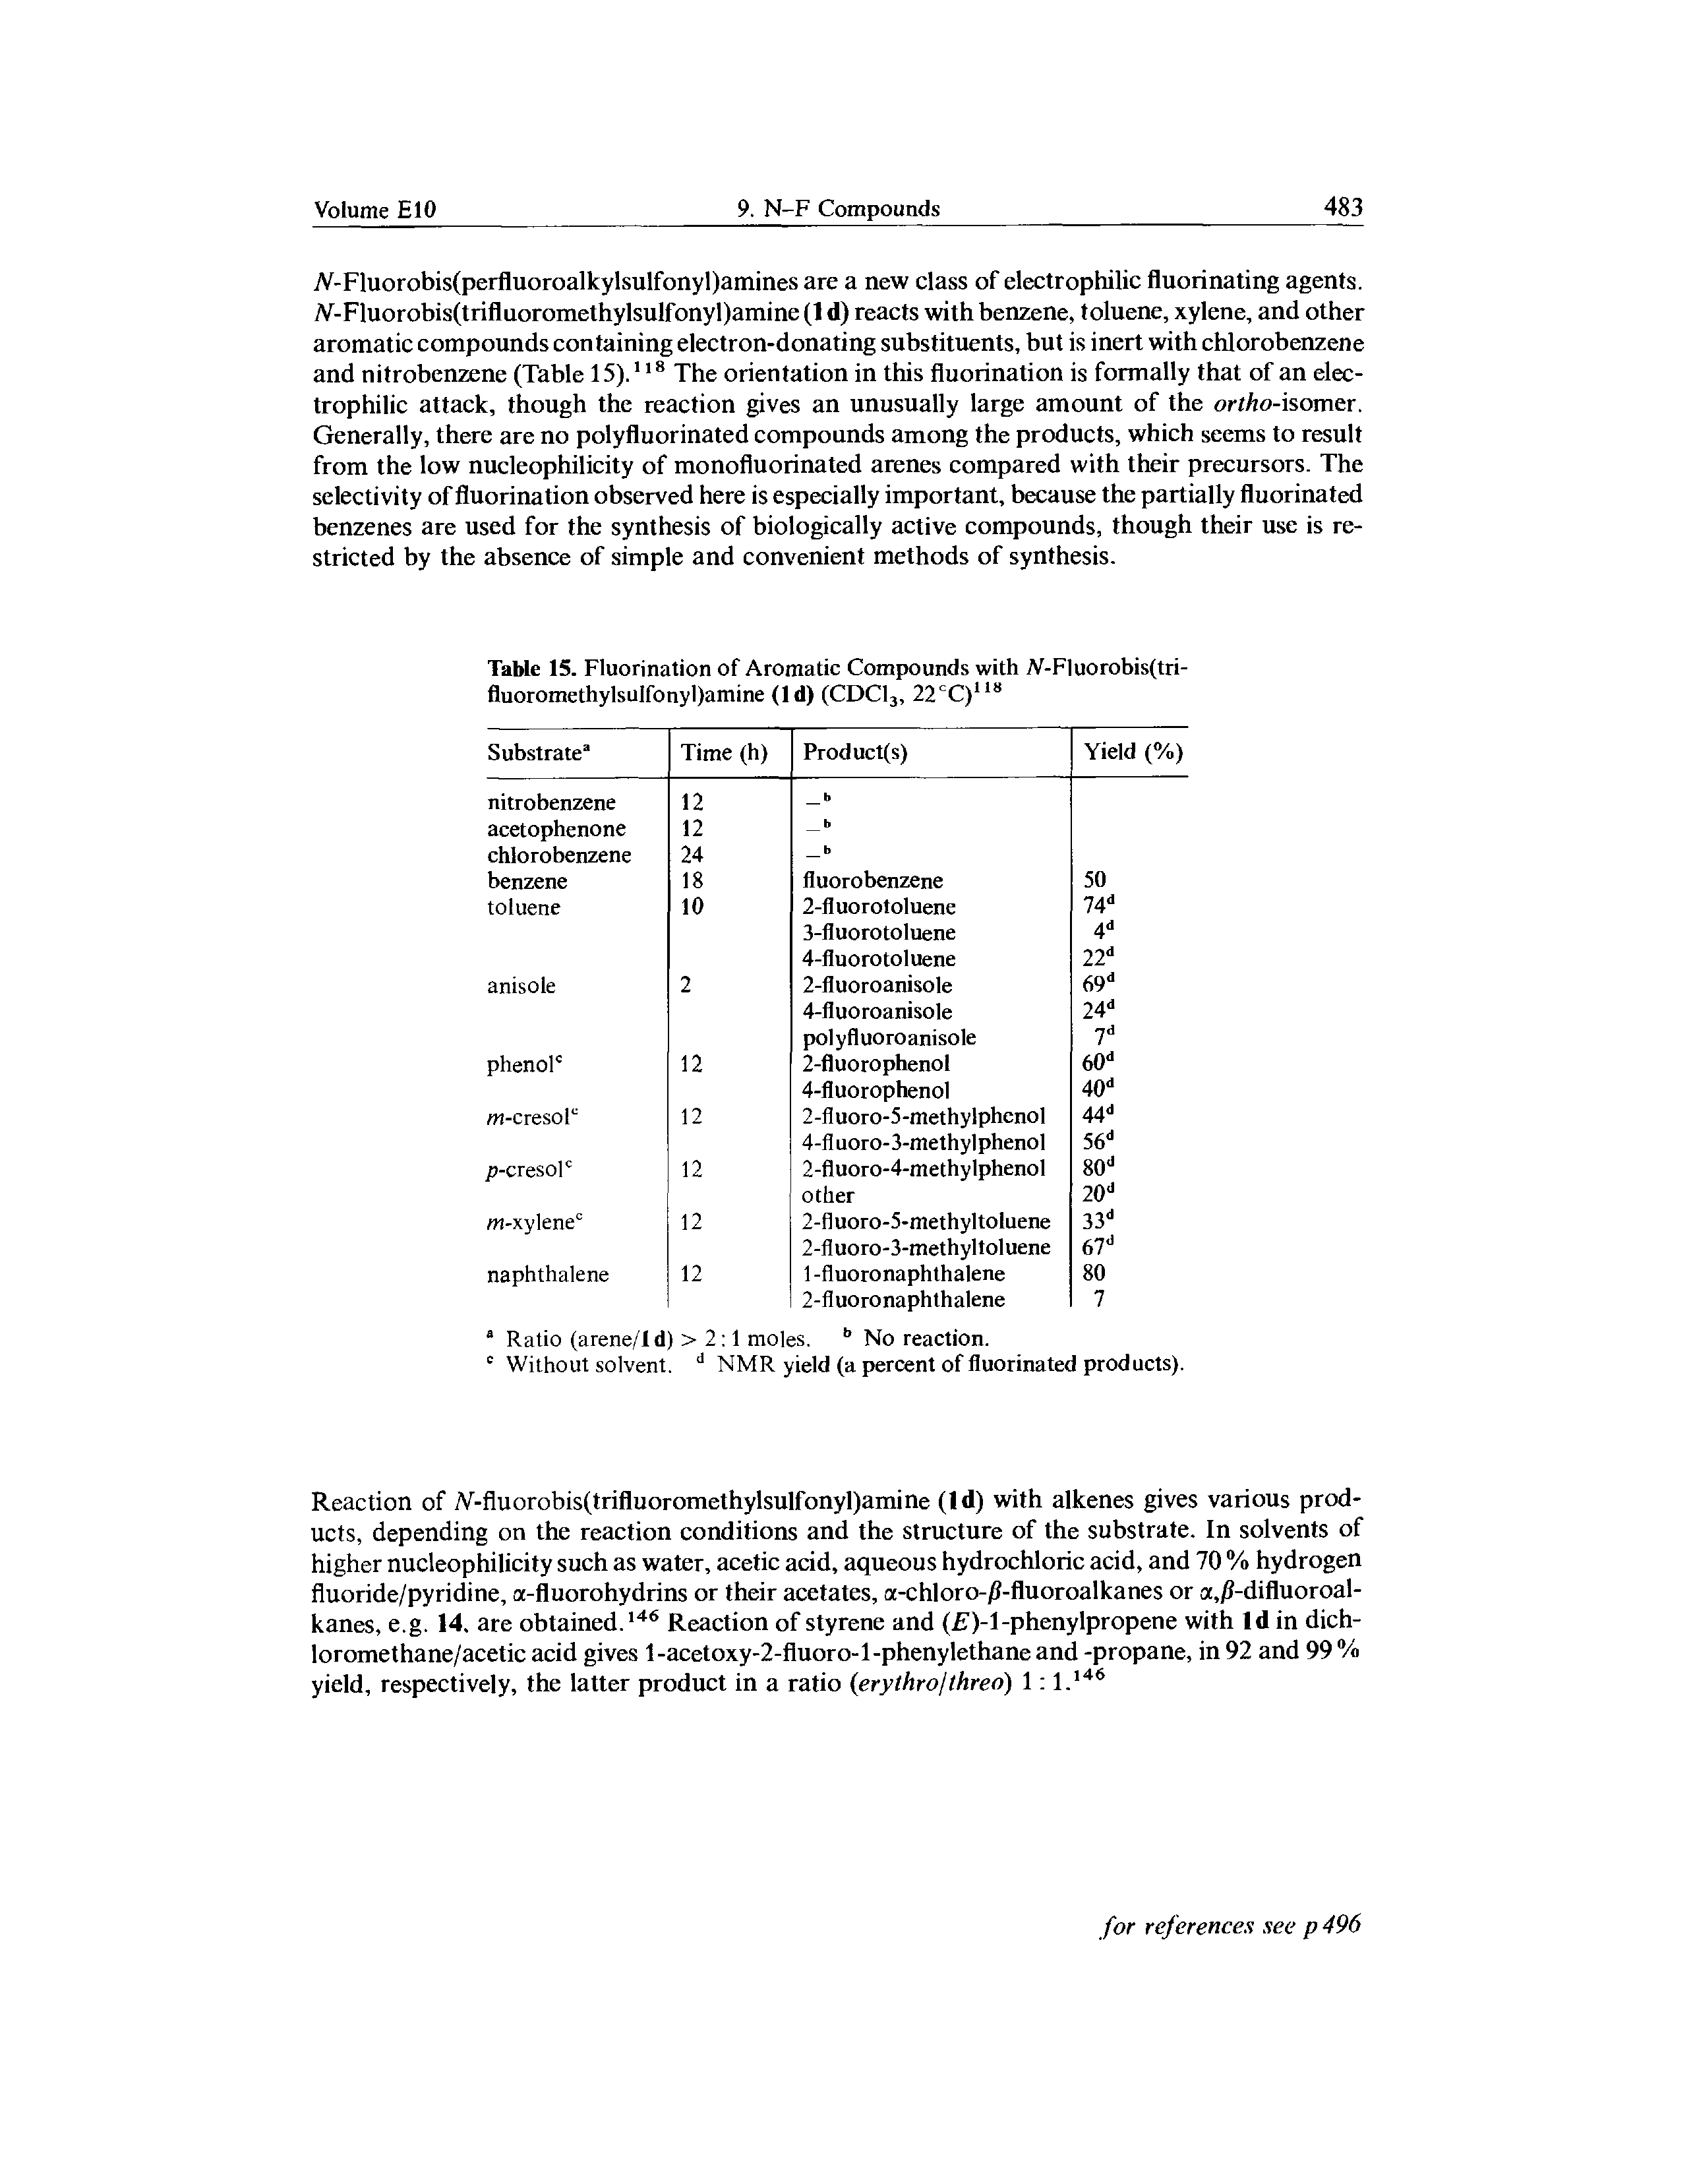 Table 15. Fluorination of Aromatic Compounds with Ar-Fluorobis(tri-fluoromethylsulfonyl)amine (Id) (CDC13, 22CC)118...